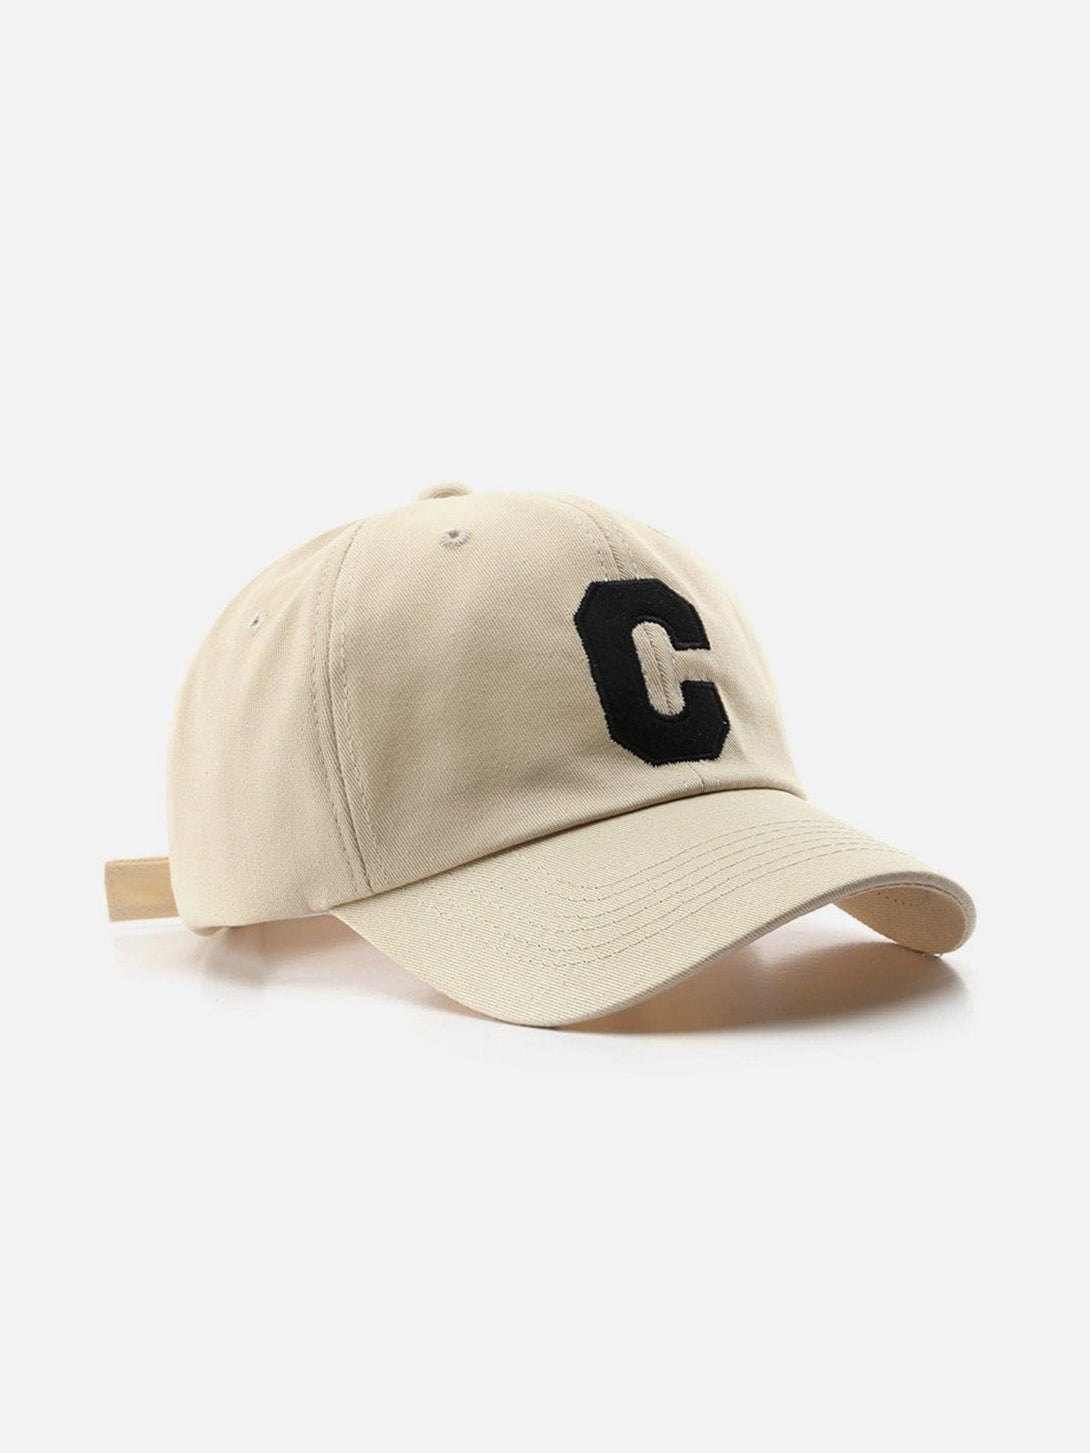 Levefly - Vintage Letter "C" Baseball Cap - Streetwear Fashion - levefly.com